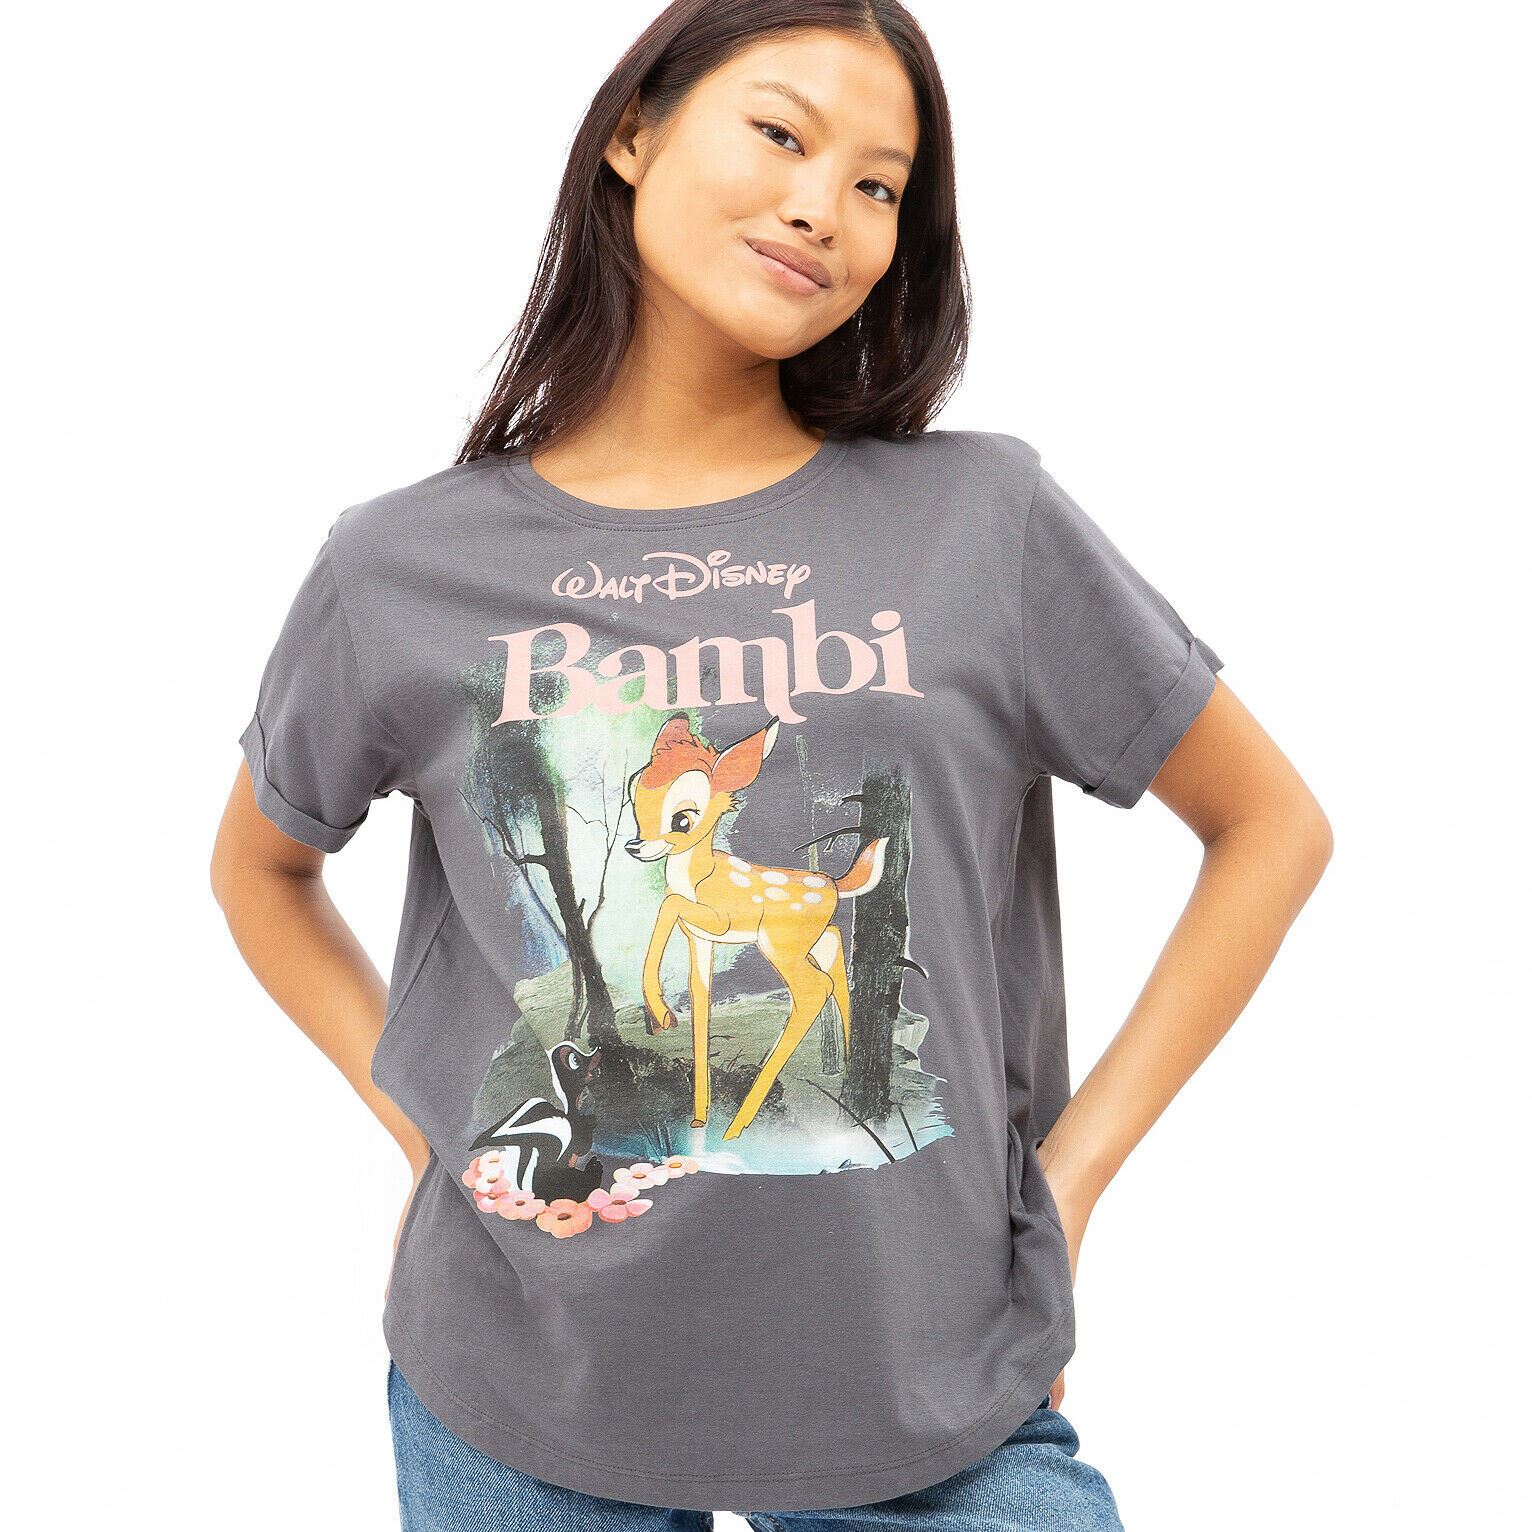 Official Disney Ladies Bambi Woodland Fashion T-shirt Black S - XL | eBay